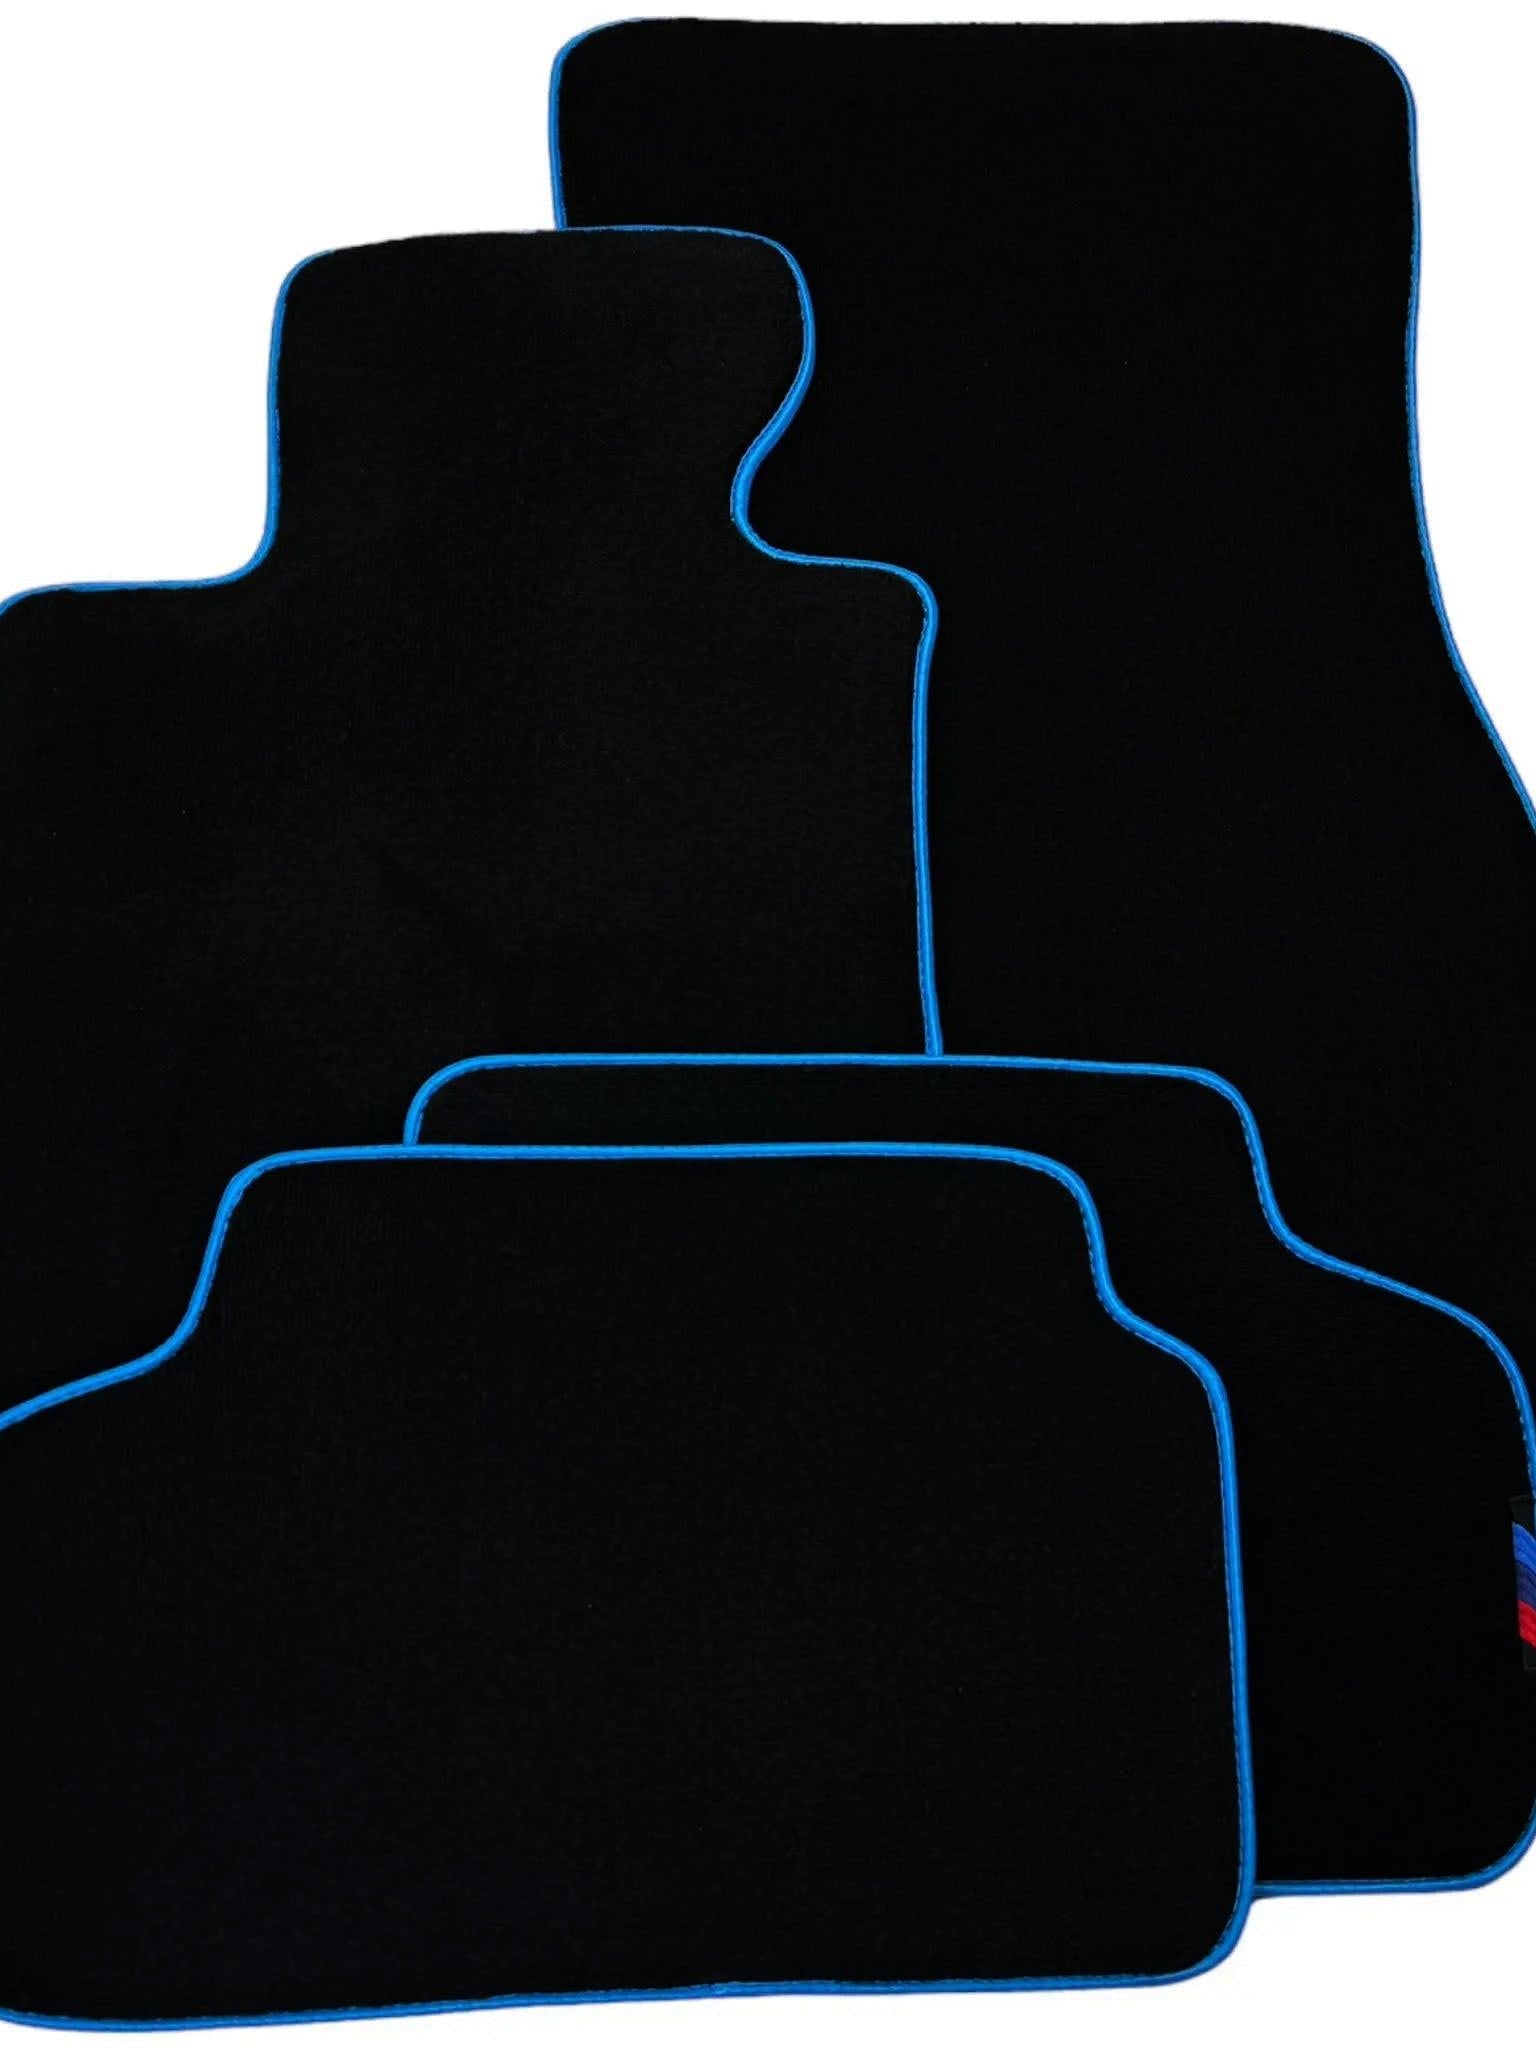 Black Floor Floor Mats For BMW X5 Series E70 | Sky Blue Trim